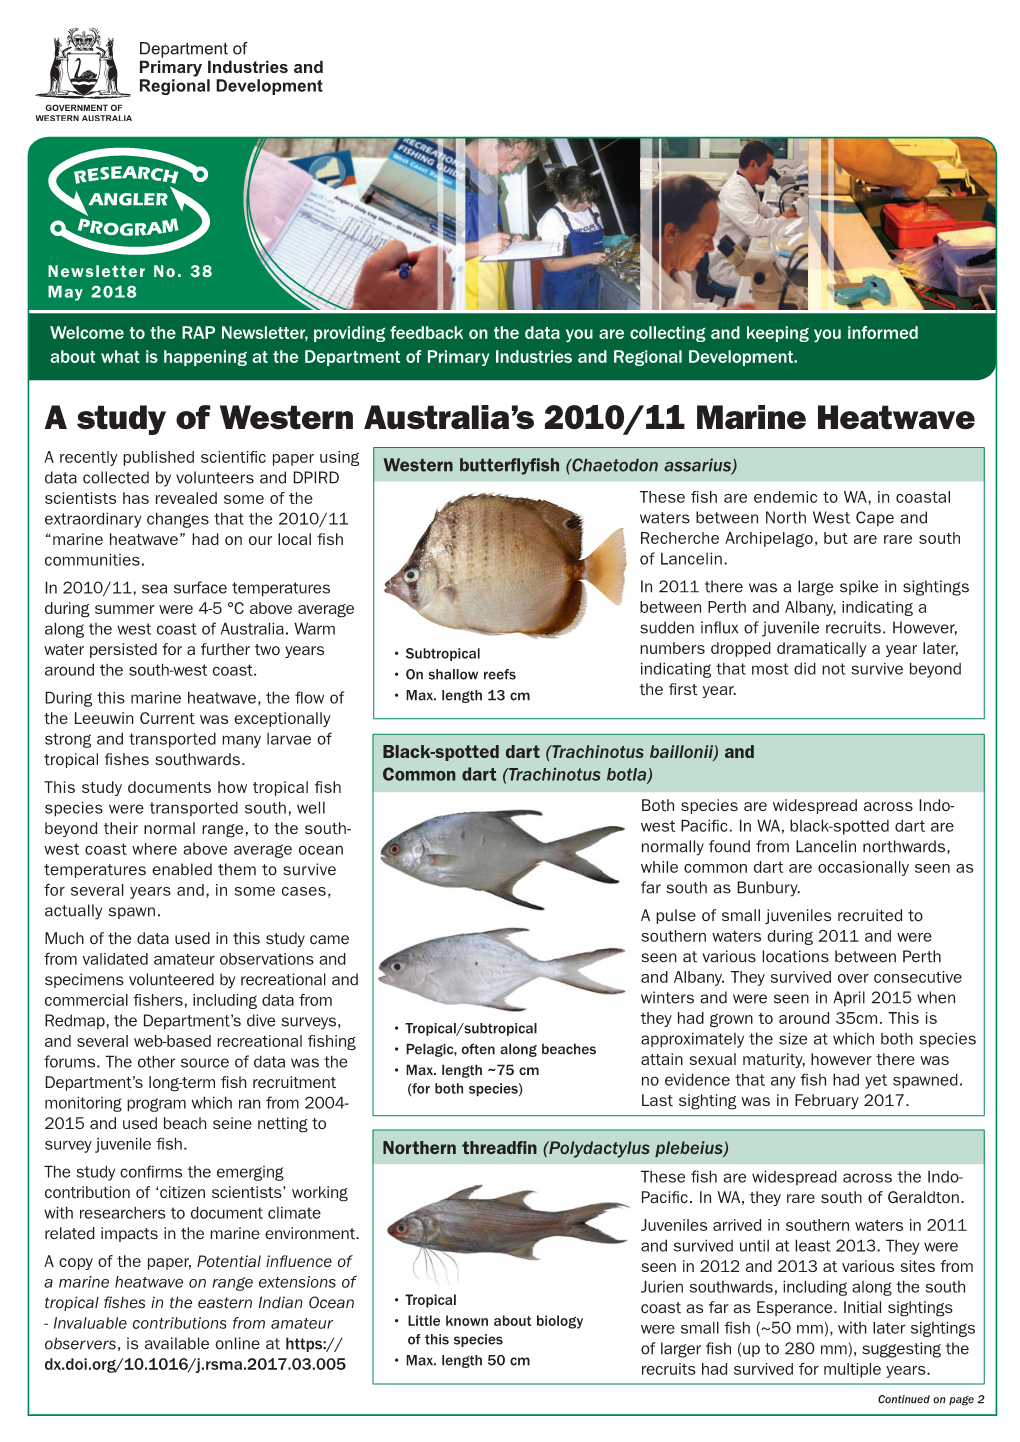 A Study of Western Australia's 2010/11 Marine Heatwave